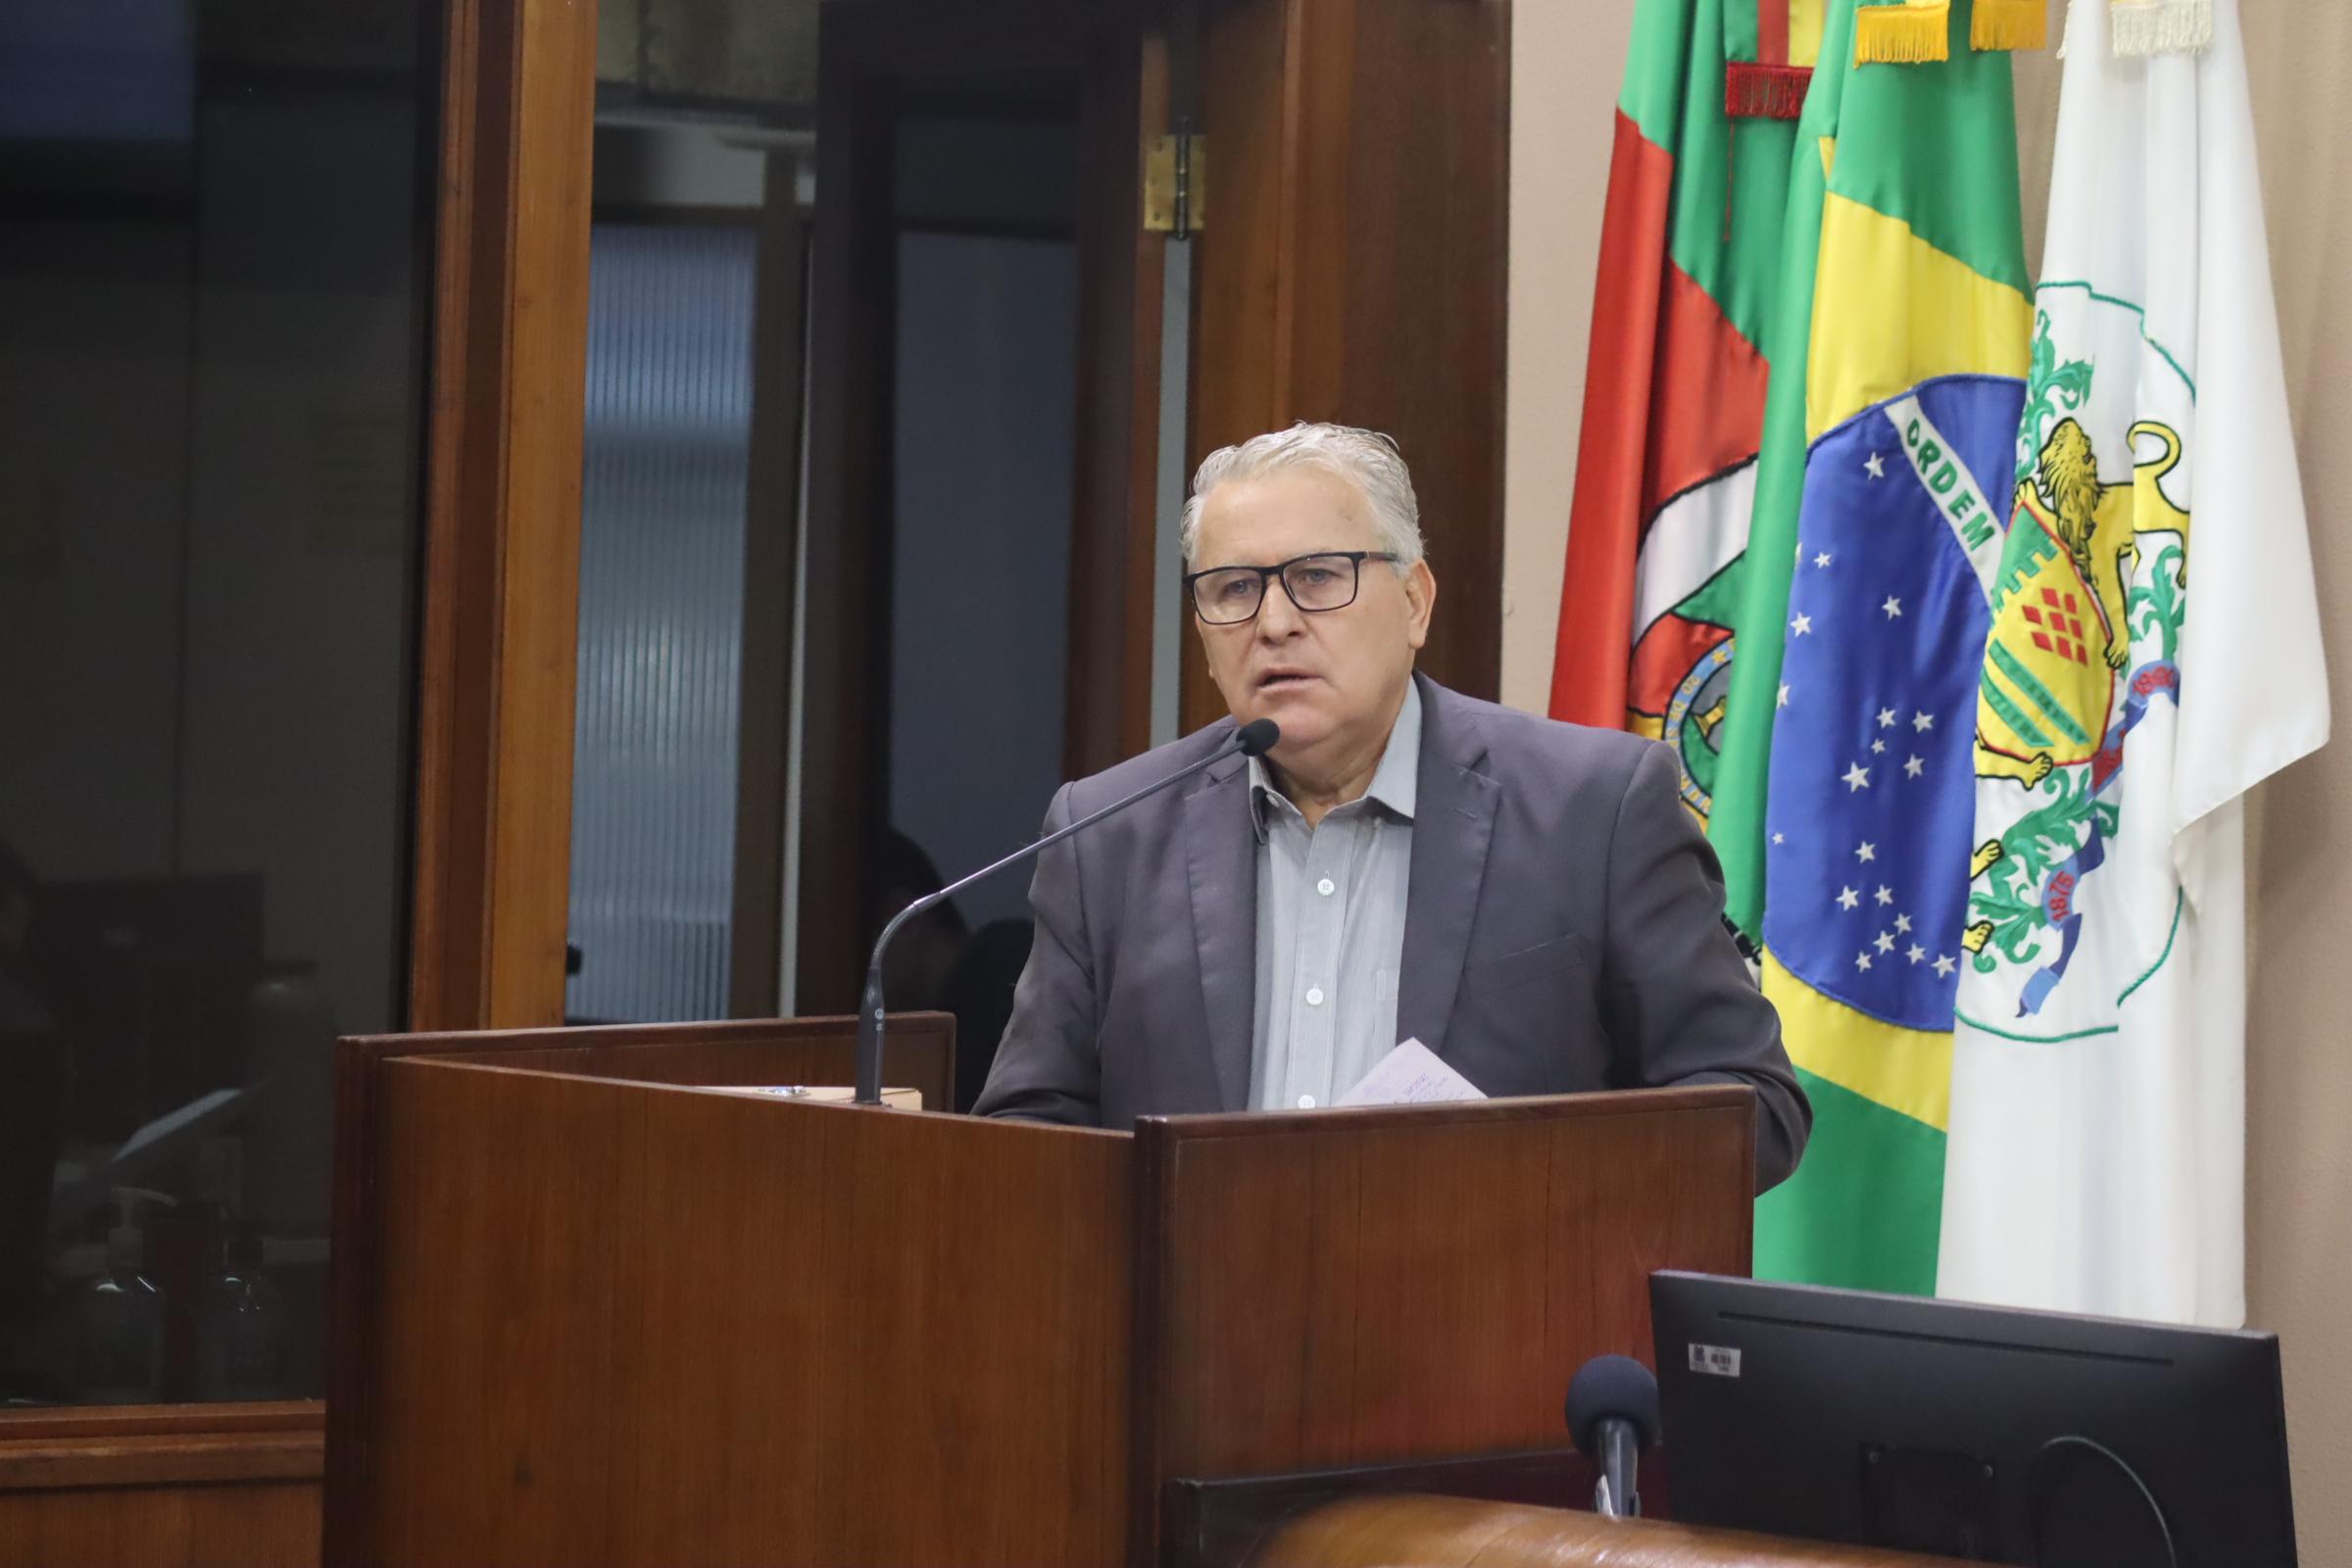 Presidente Zé Dambrós convida para visita do Parlamento Regional ao HG nesta quinta-feira